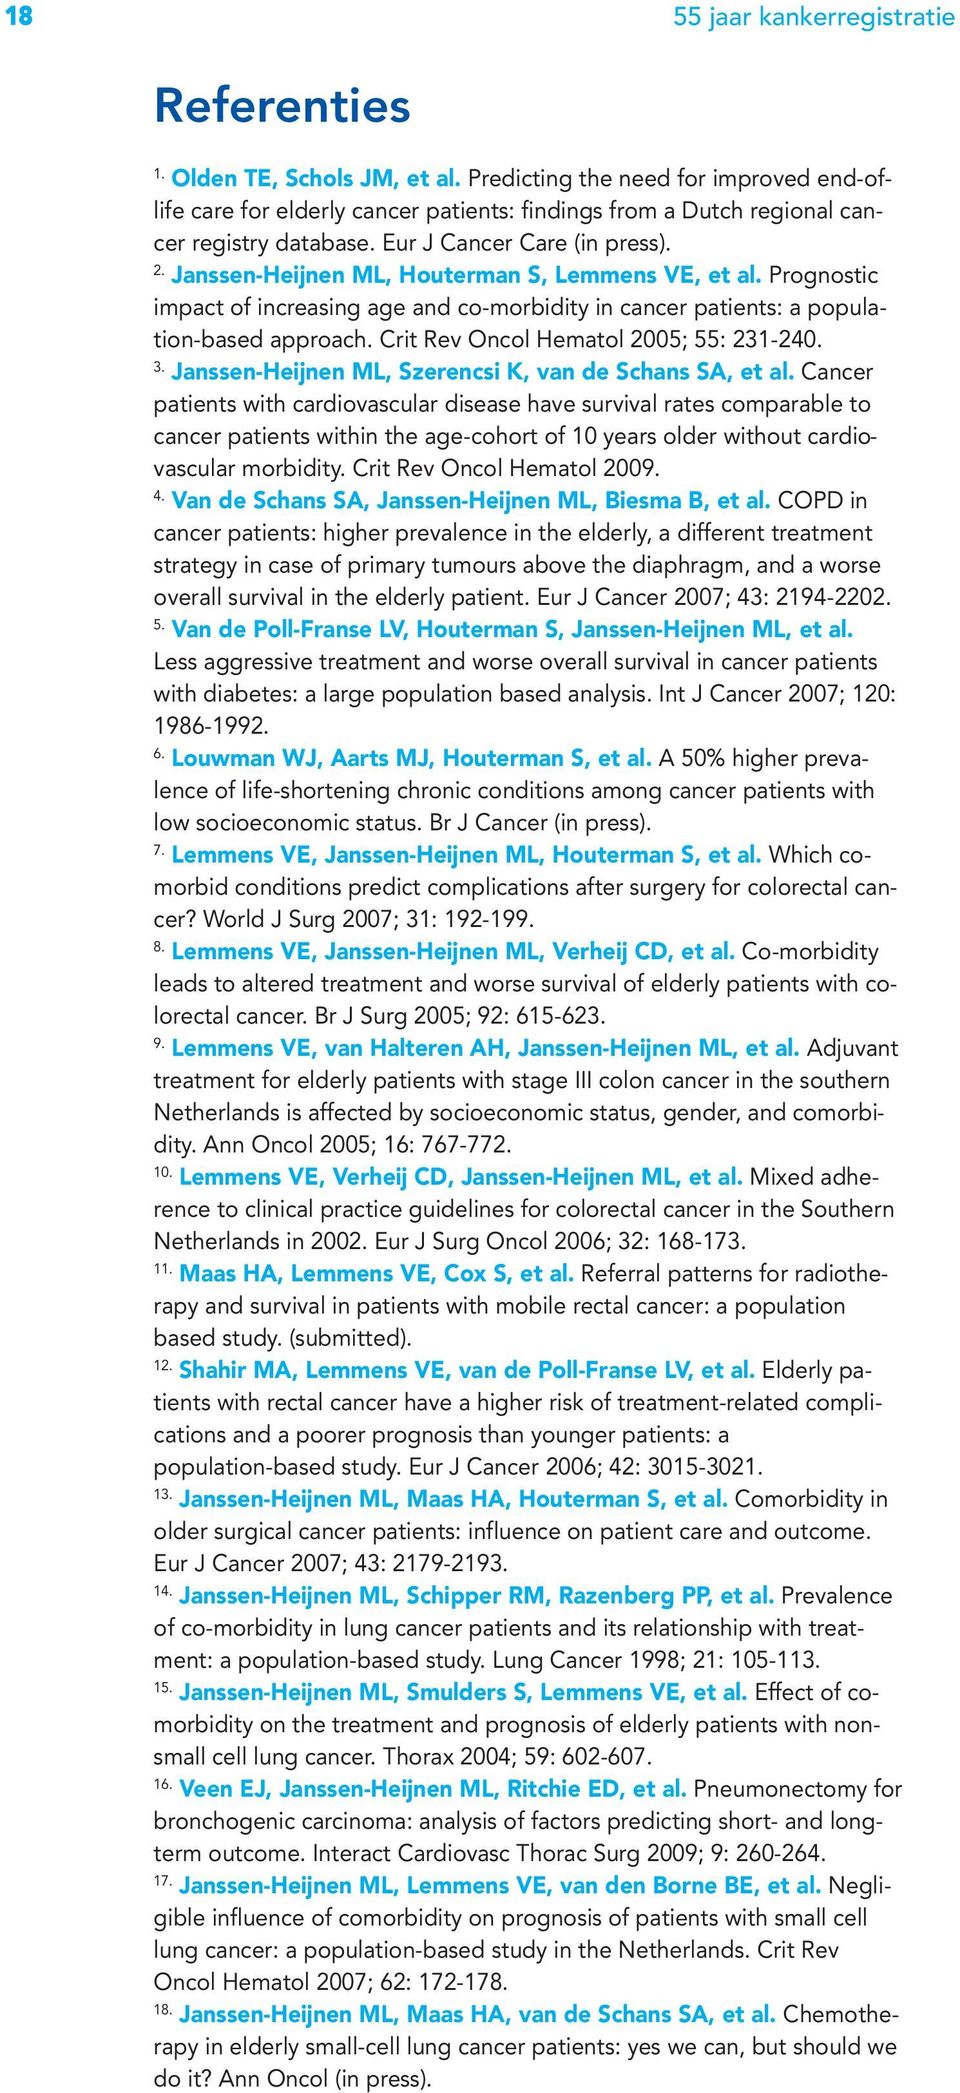 Janssen-Heijnen ML, Houterman S, Lemmens VE, et al. Prognostic impact of increasing age and co-morbidity in cancer patients: a population-based approach. Crit Rev Oncol Hematol 2005; 55: 231-240. 3.